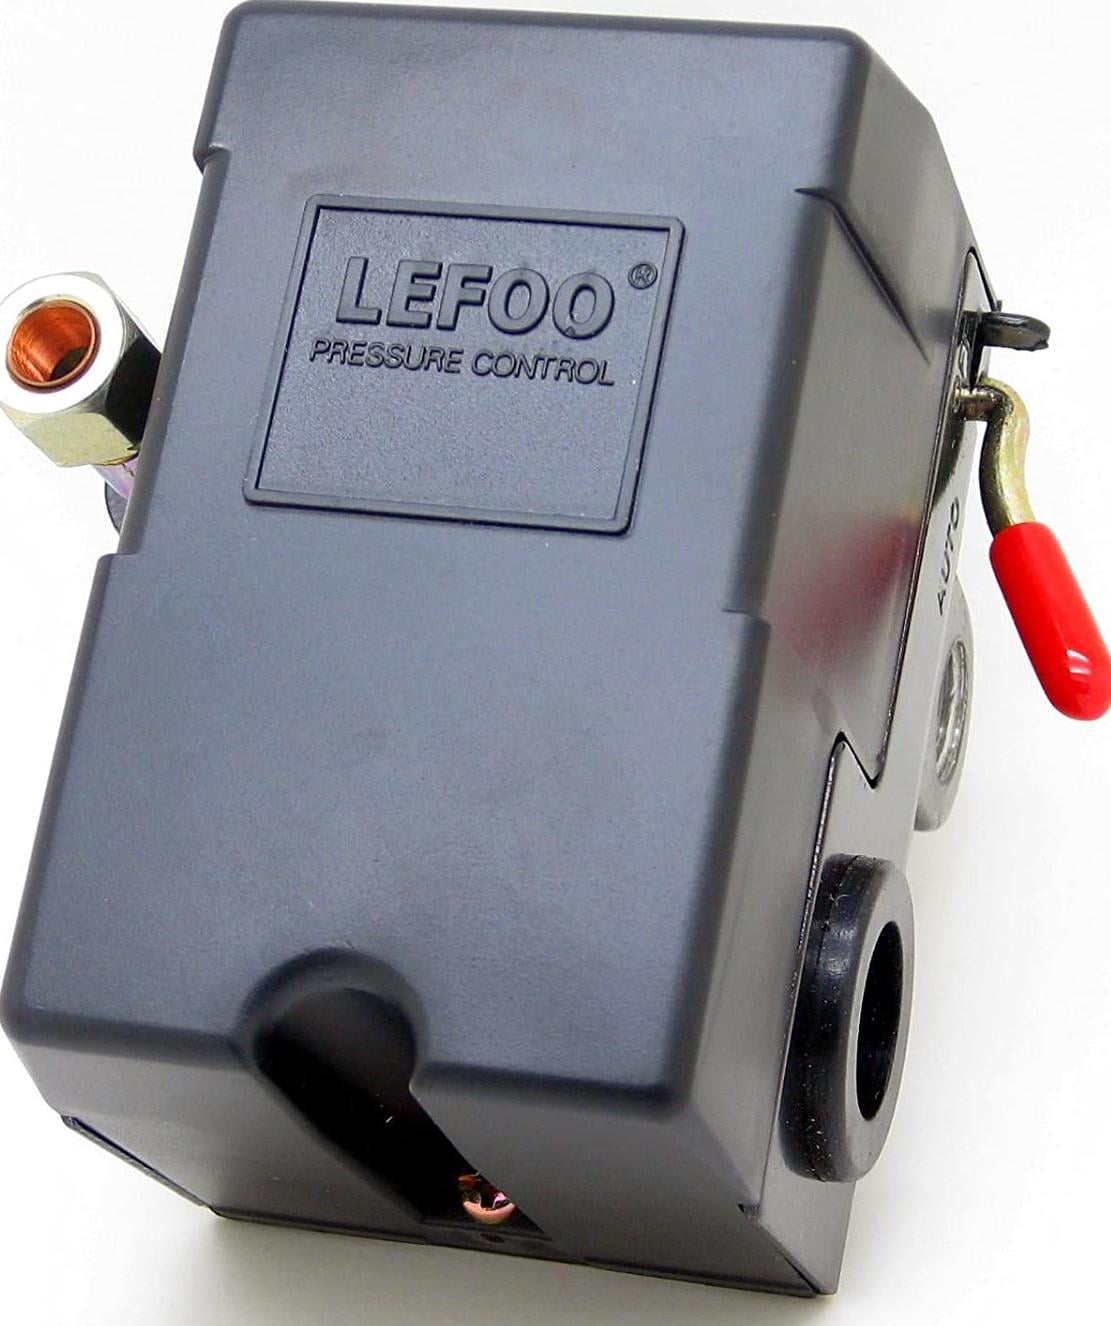 Lefoo Quality Air Compressor Pressure Switch Control 95-125 PSI 4 Port w/Unloader